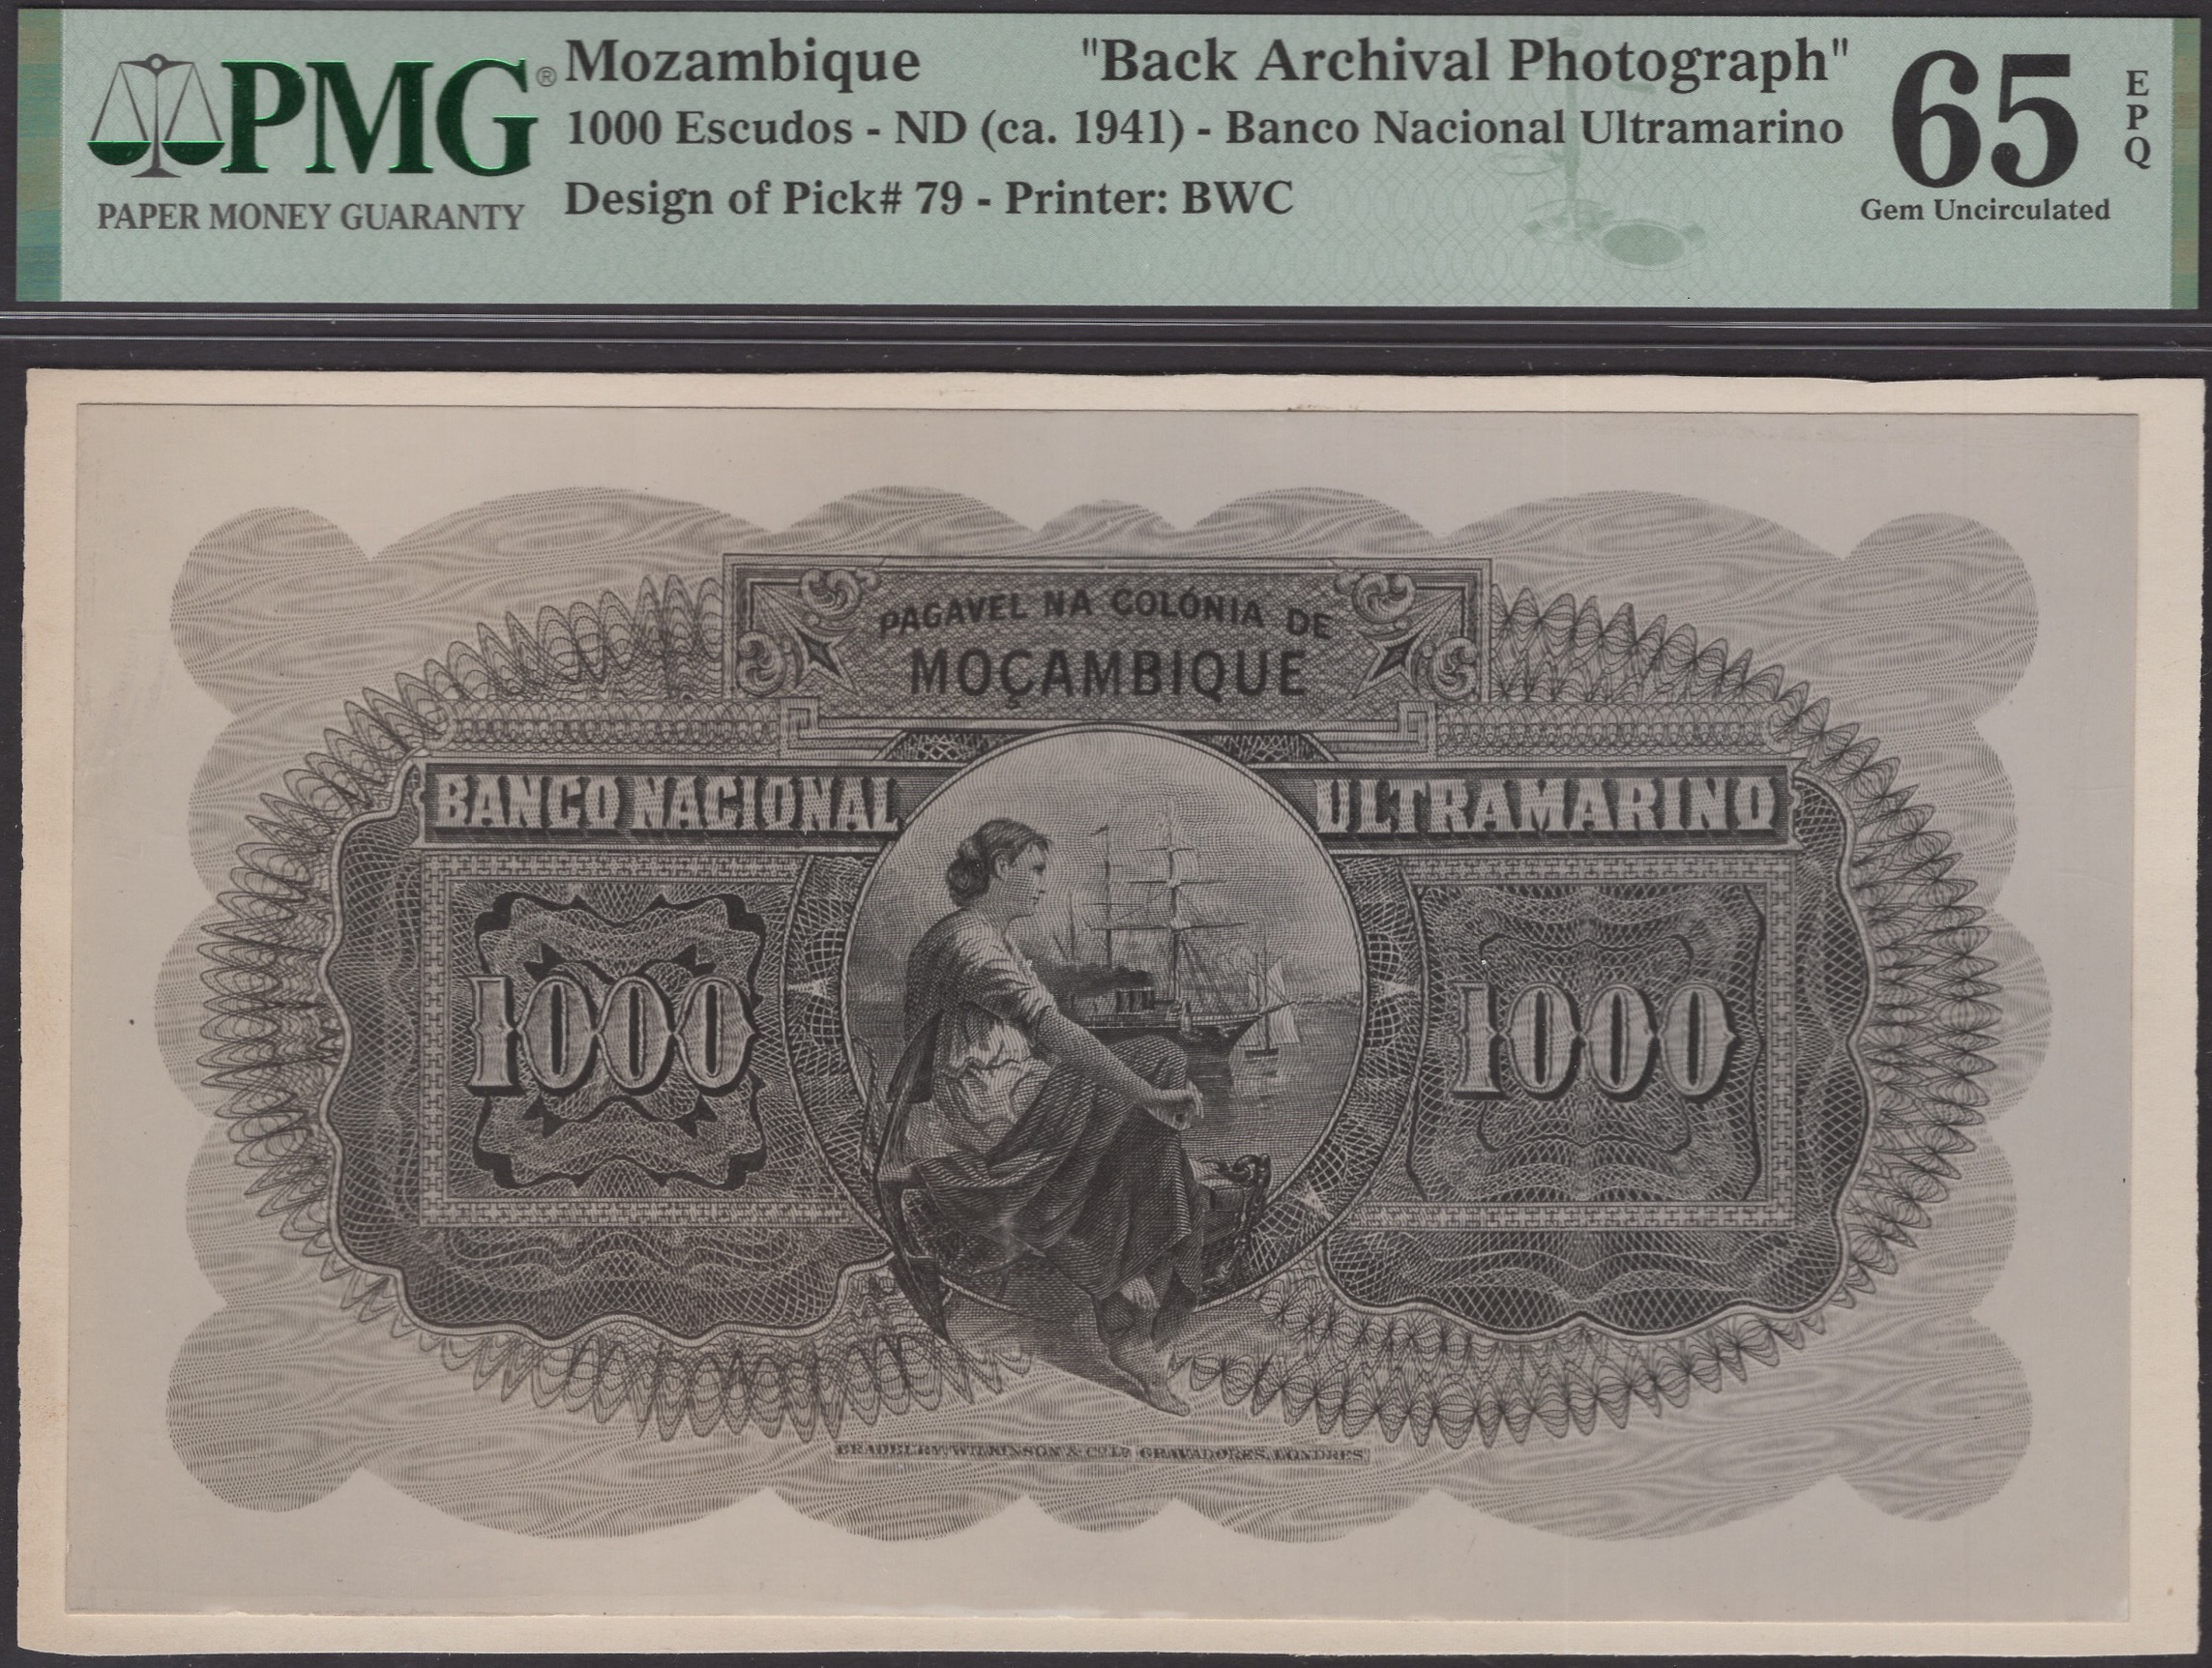 Banco Nacional Ultramarino, Mozambique, obverse (1) and reverse (2) archival photographs...